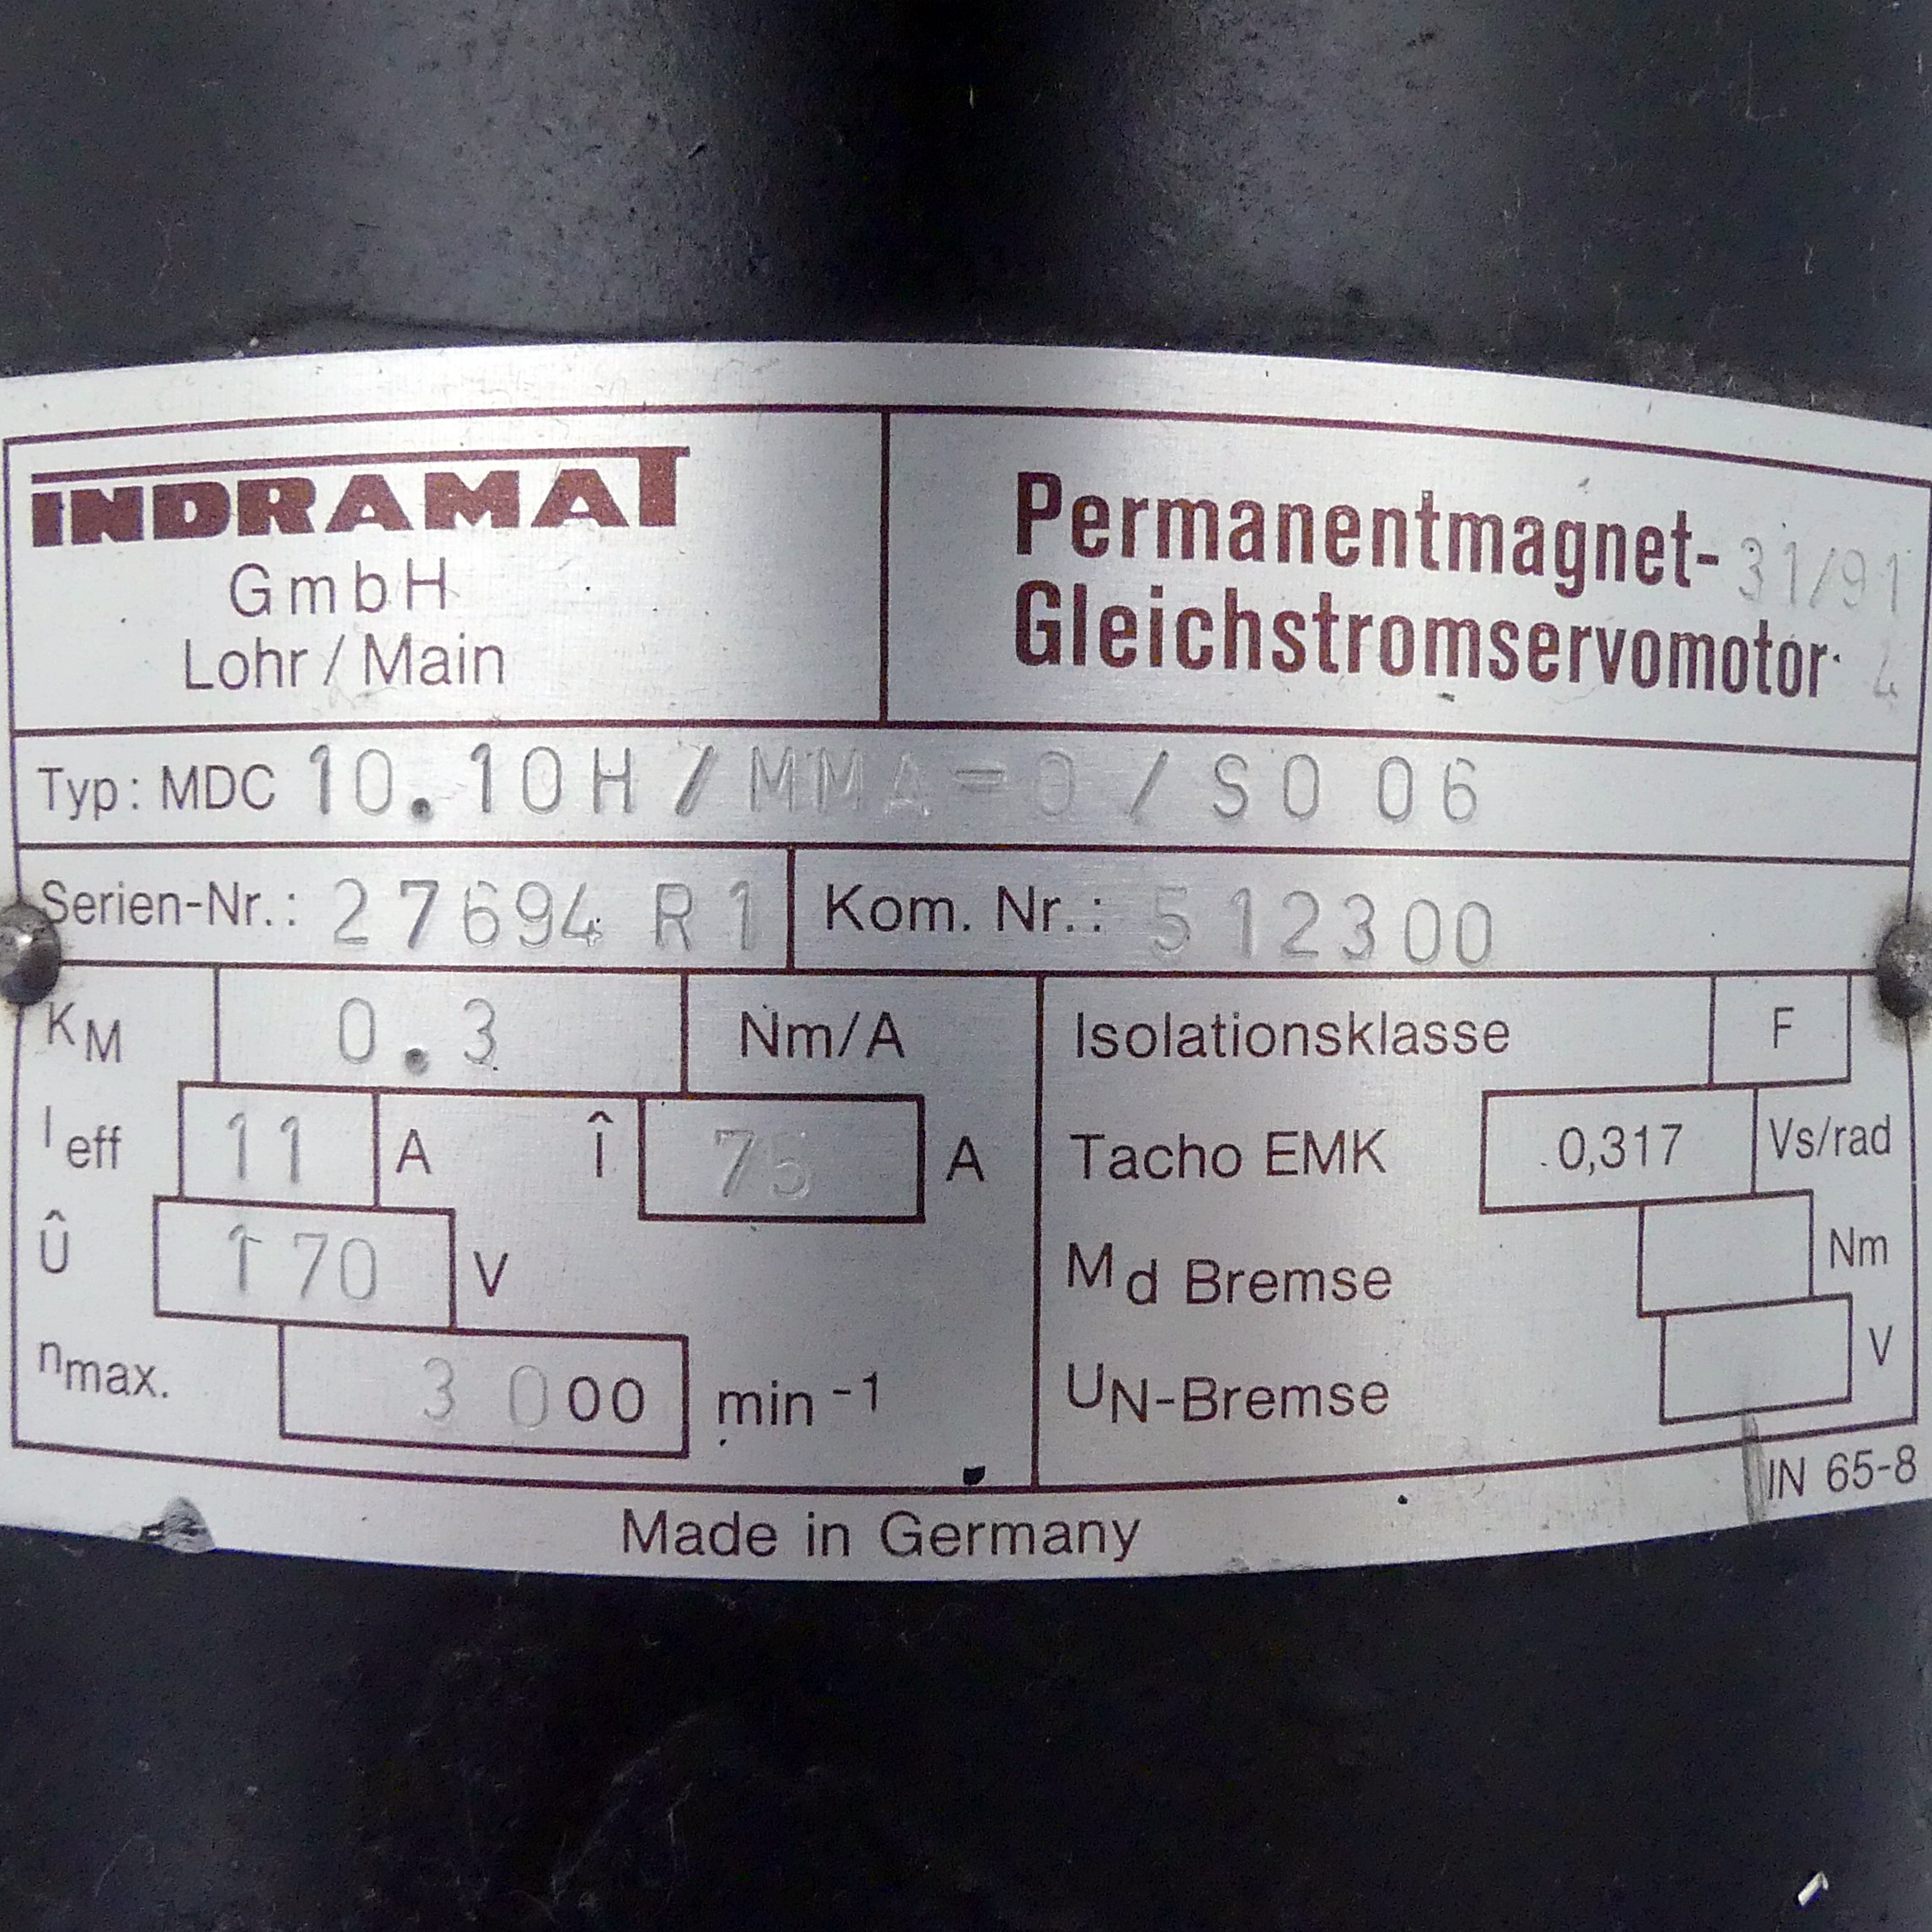 Permanentmagnet - Gleichstromservomotor 10,10H / MMA-0 / S 006 